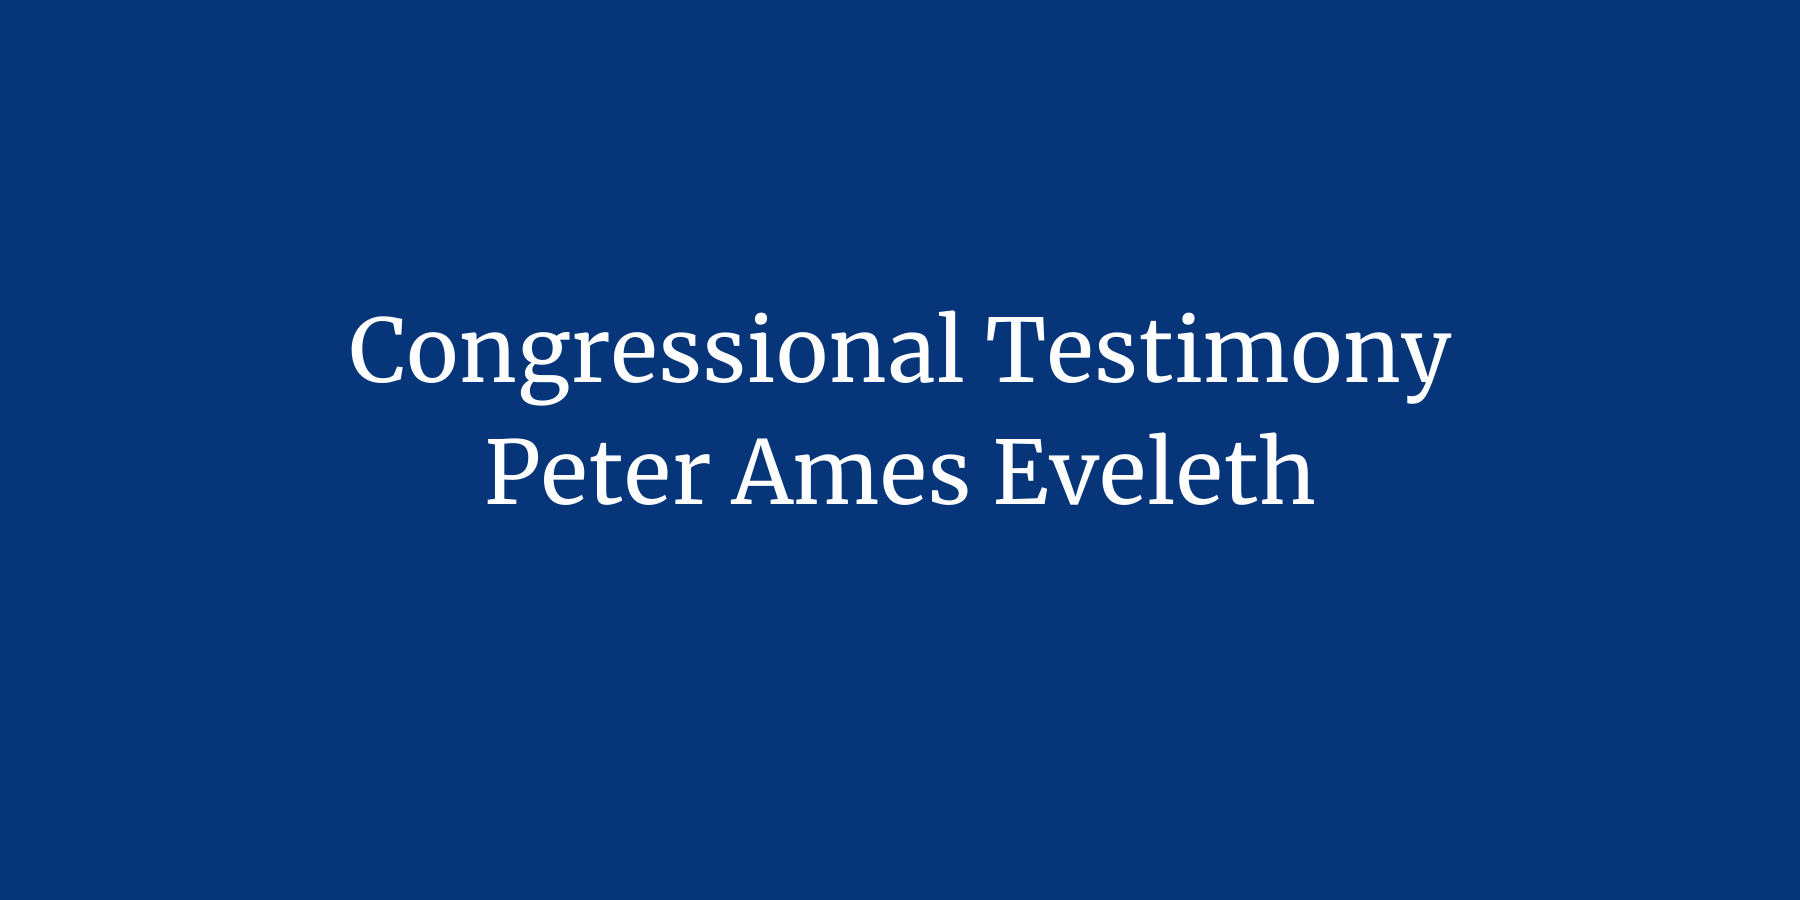 Congressional Testimony Peter Ames Eveleth